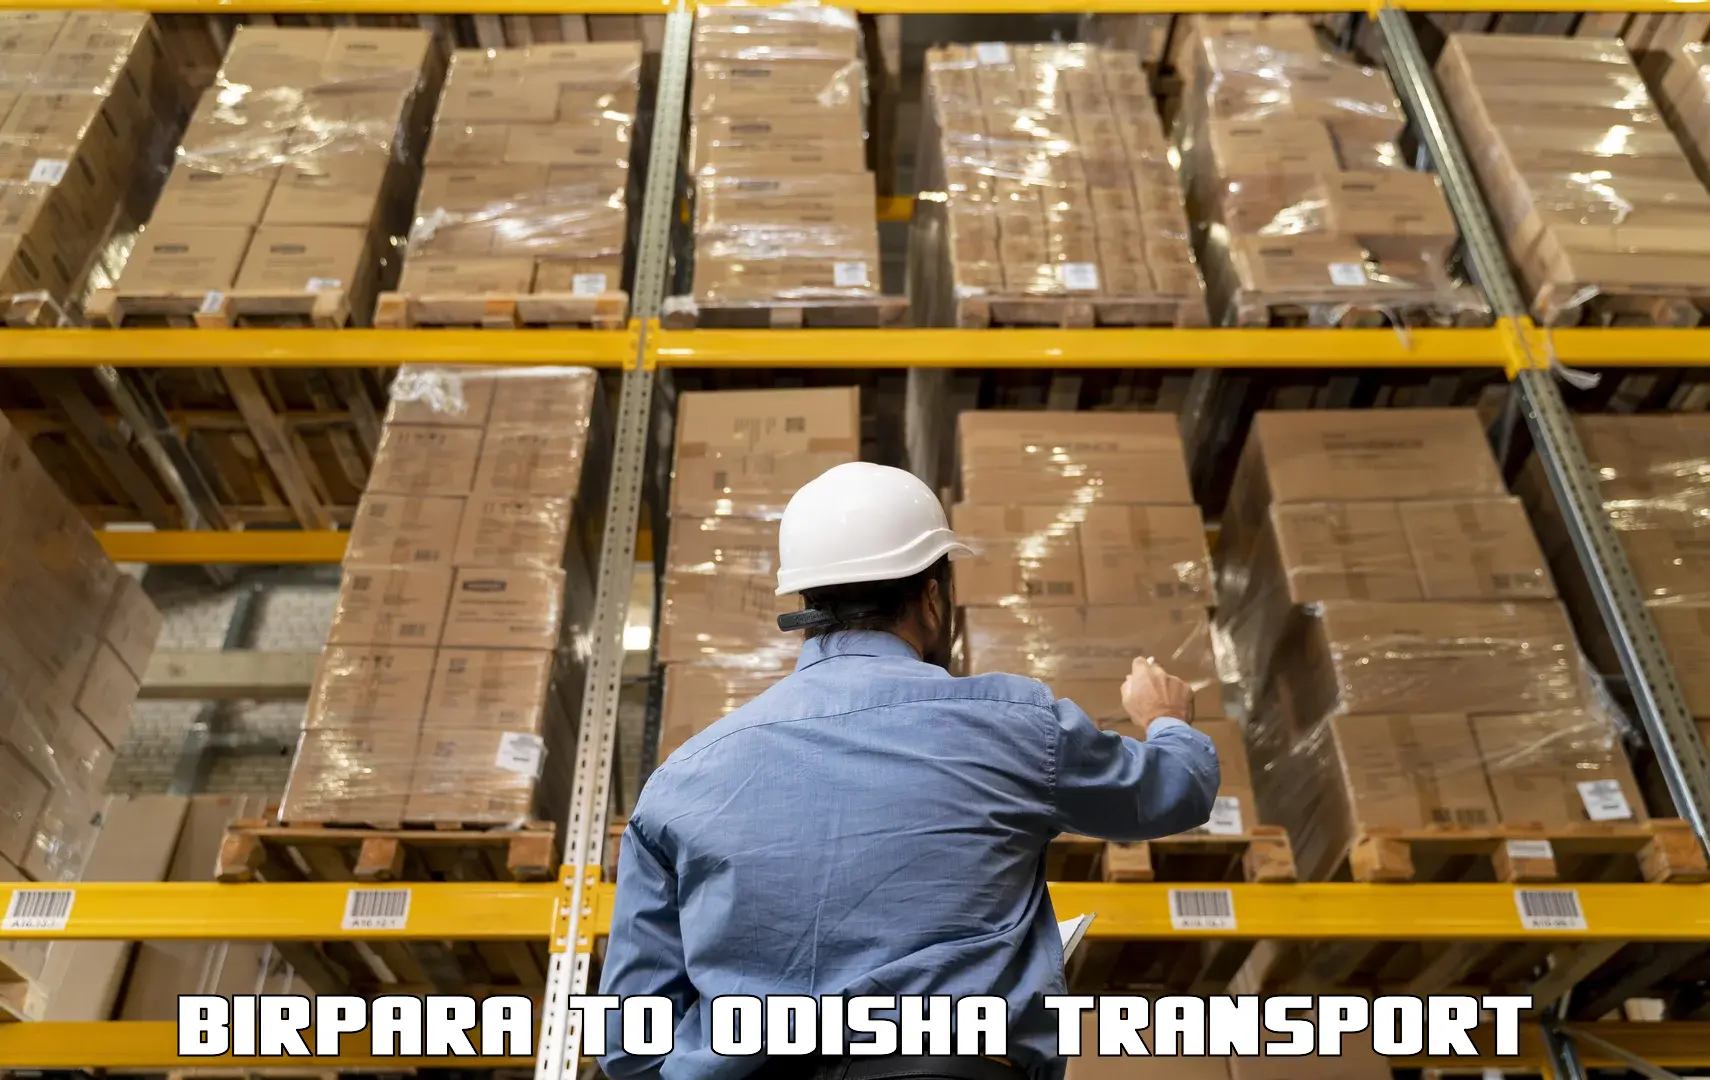 Shipping partner Birpara to Udala